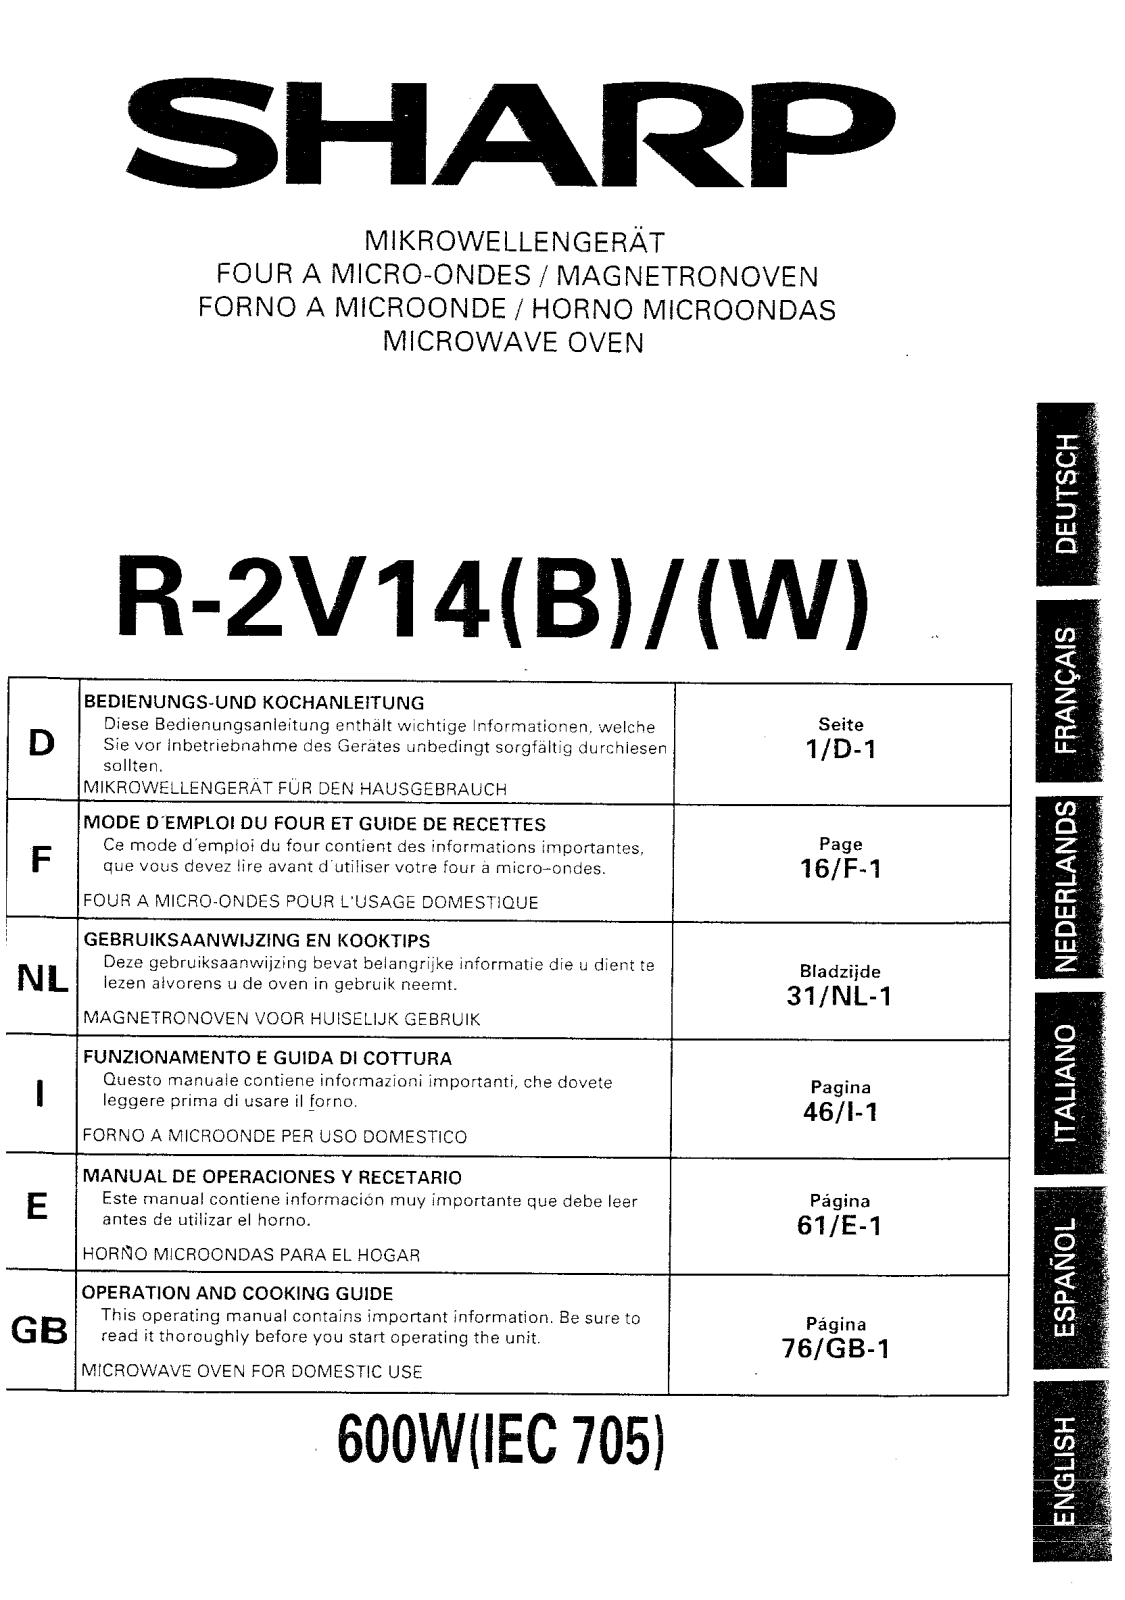 SHARP R-2V14 User Manual